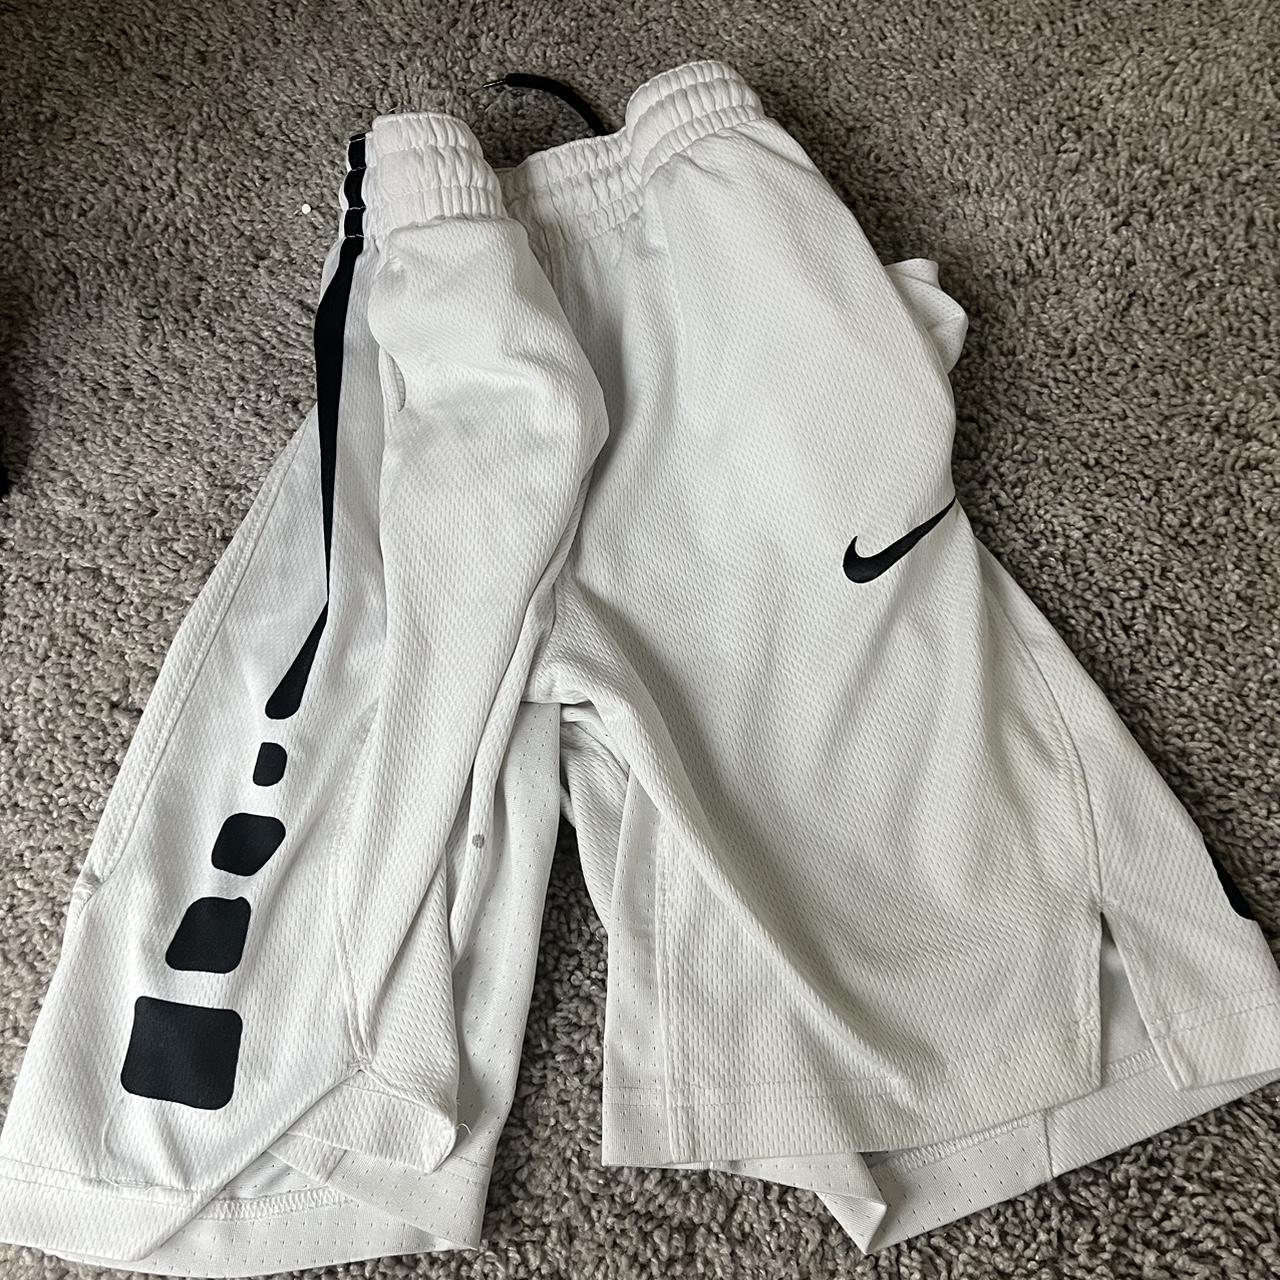 Nike Elite shorts - Depop